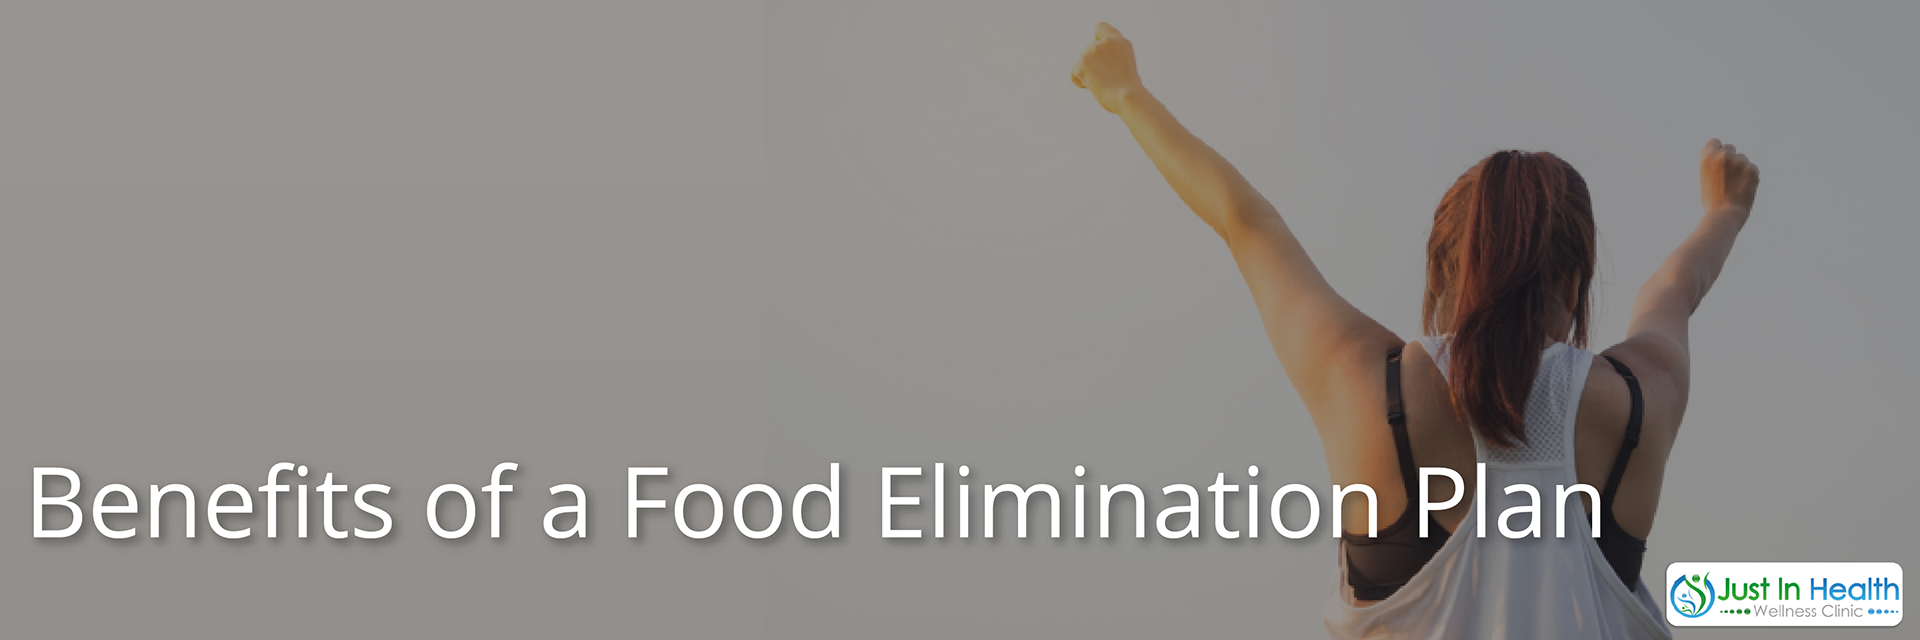 Food elimination plan benefits